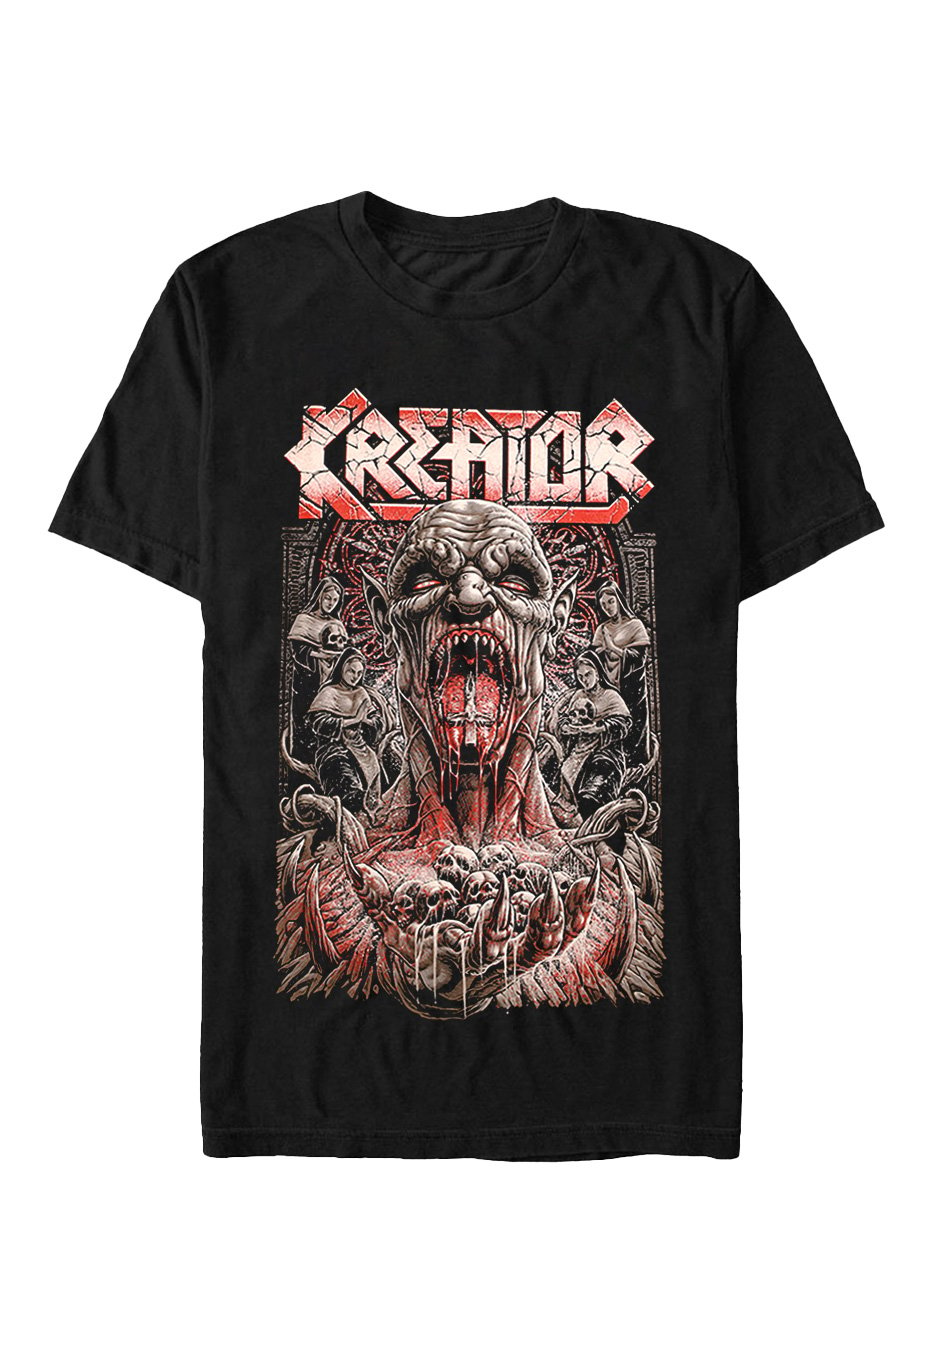 Kreator - Killer Of Jesus - T-Shirt